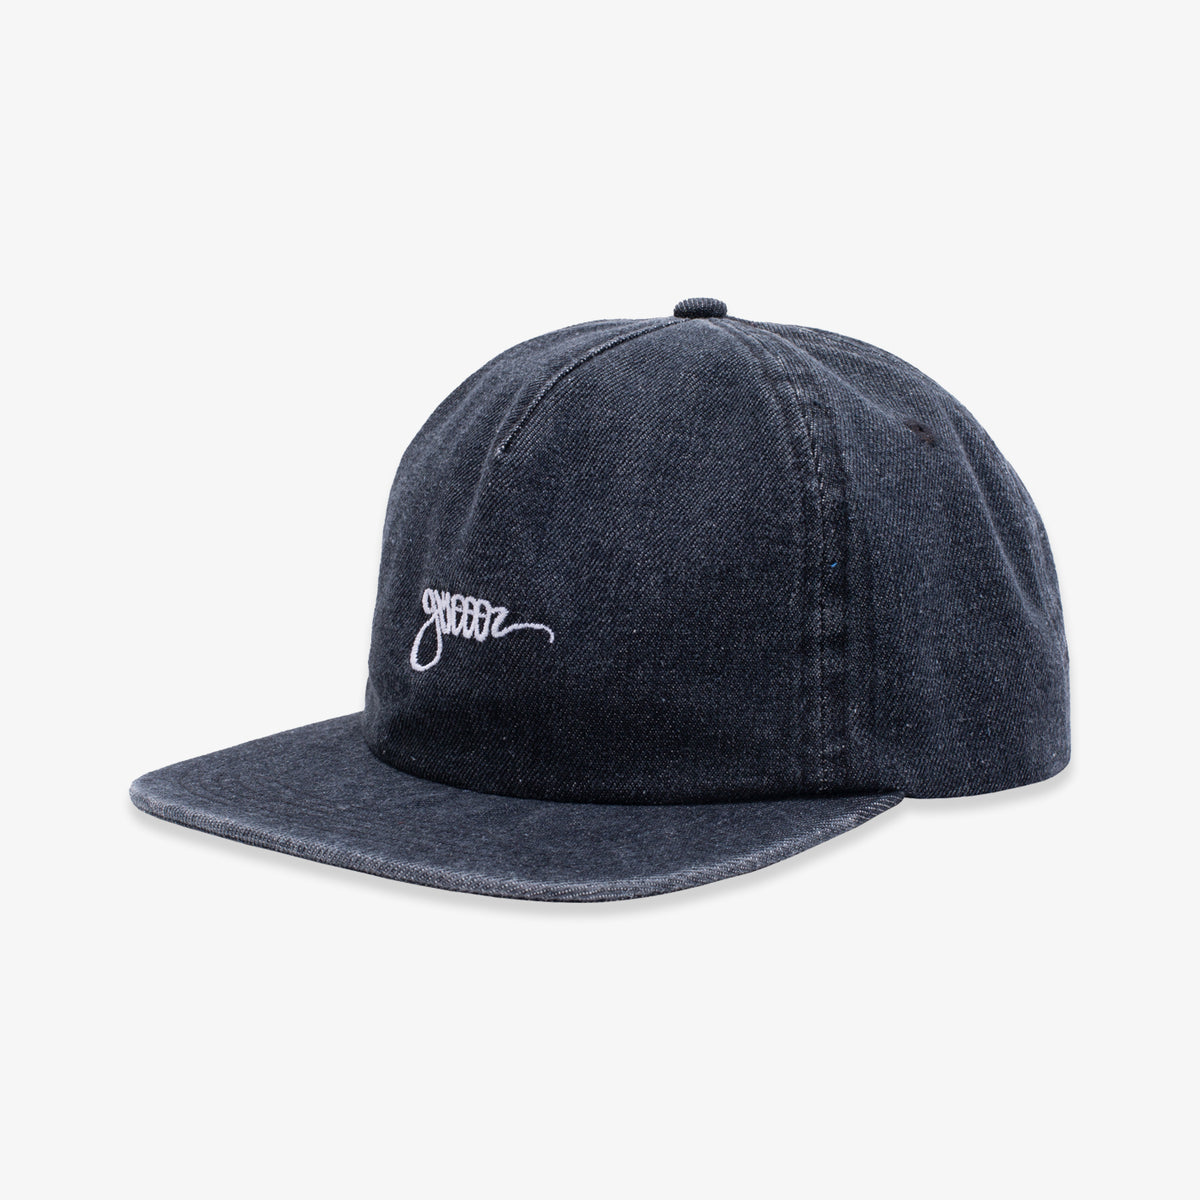 Tag Hat (Black)